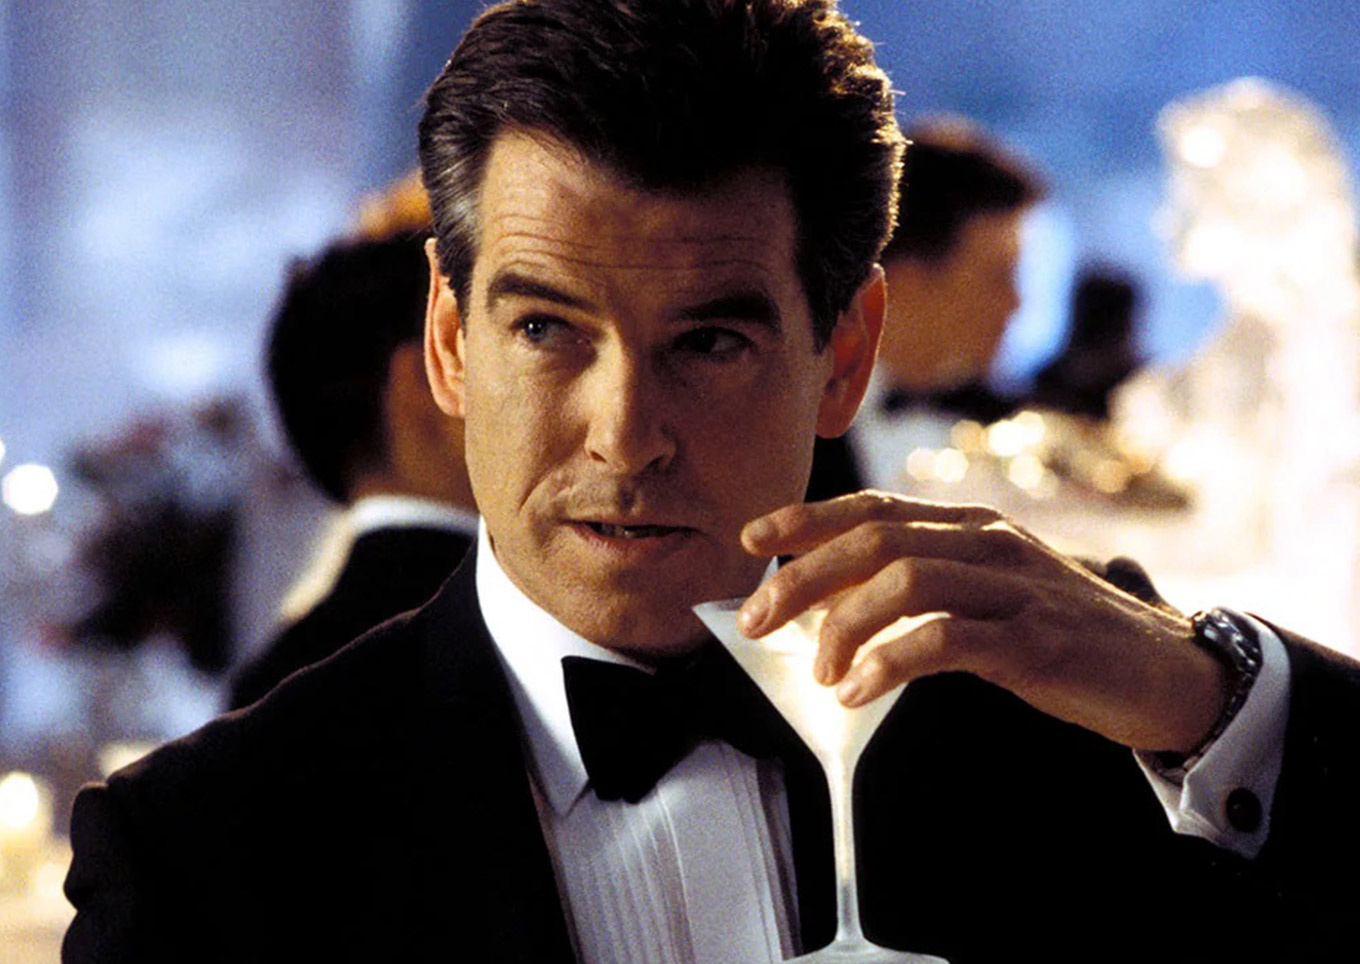 Omega watches worn by Pierce Brosnan in James Bond